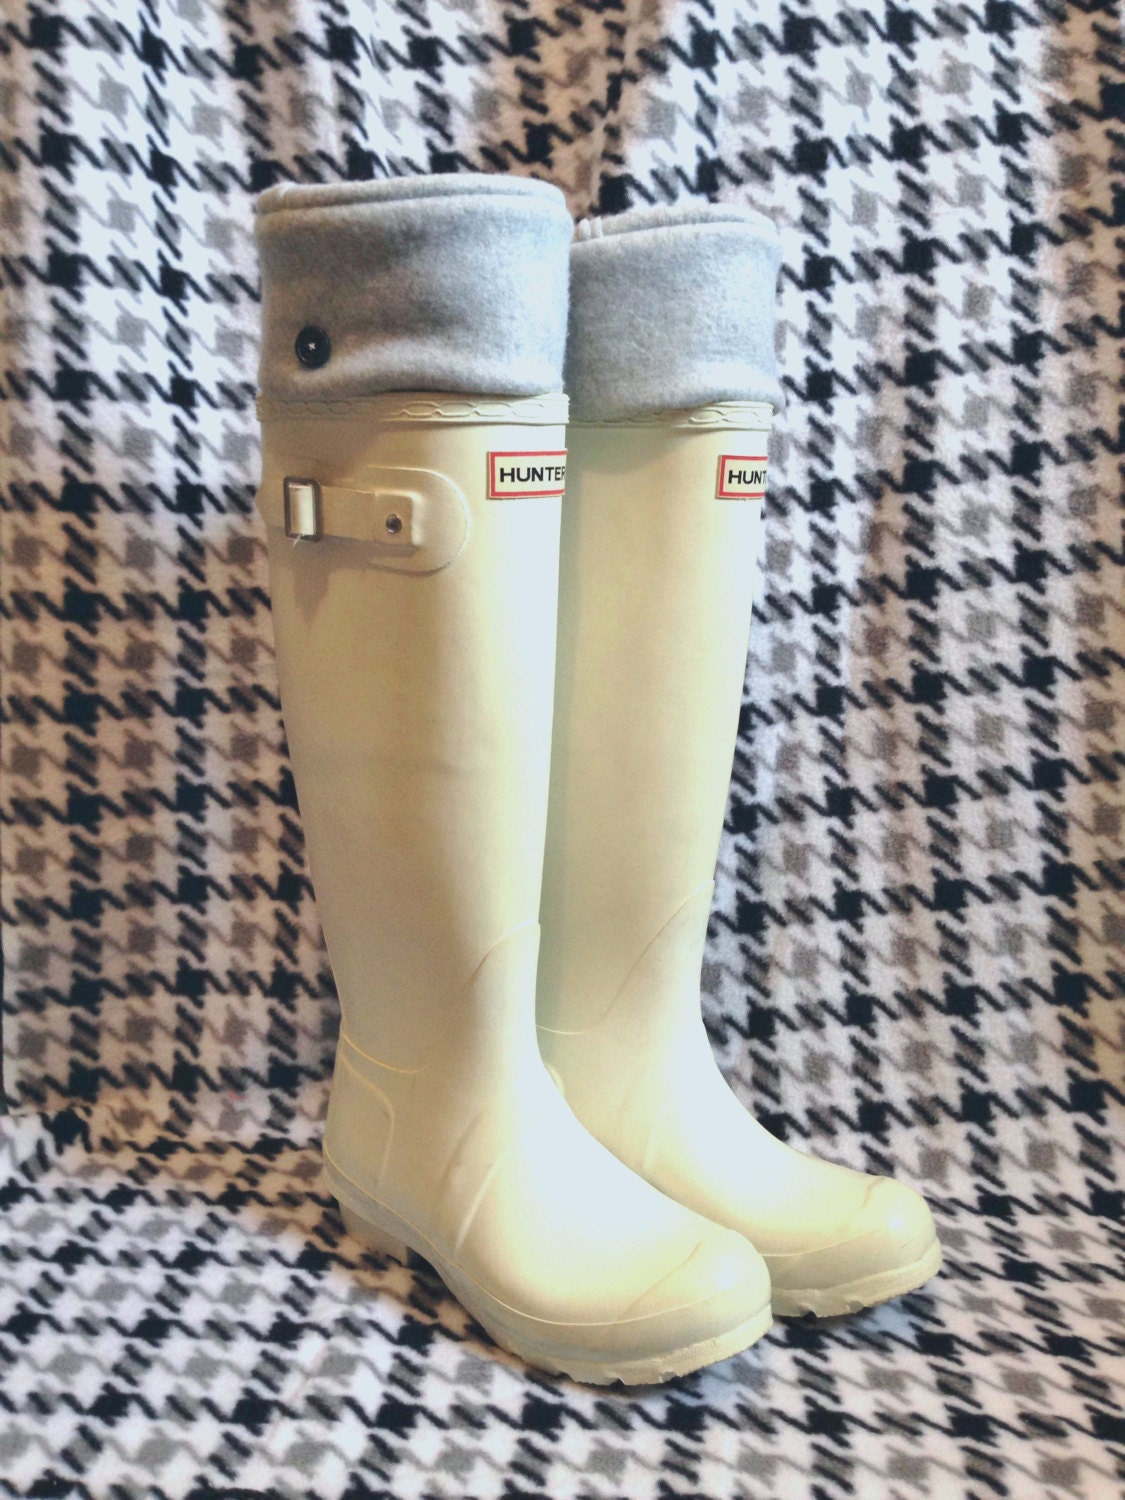 SLUGS Fleece Rain Boot Liners Solid Light Heather Gray Fall | Etsy